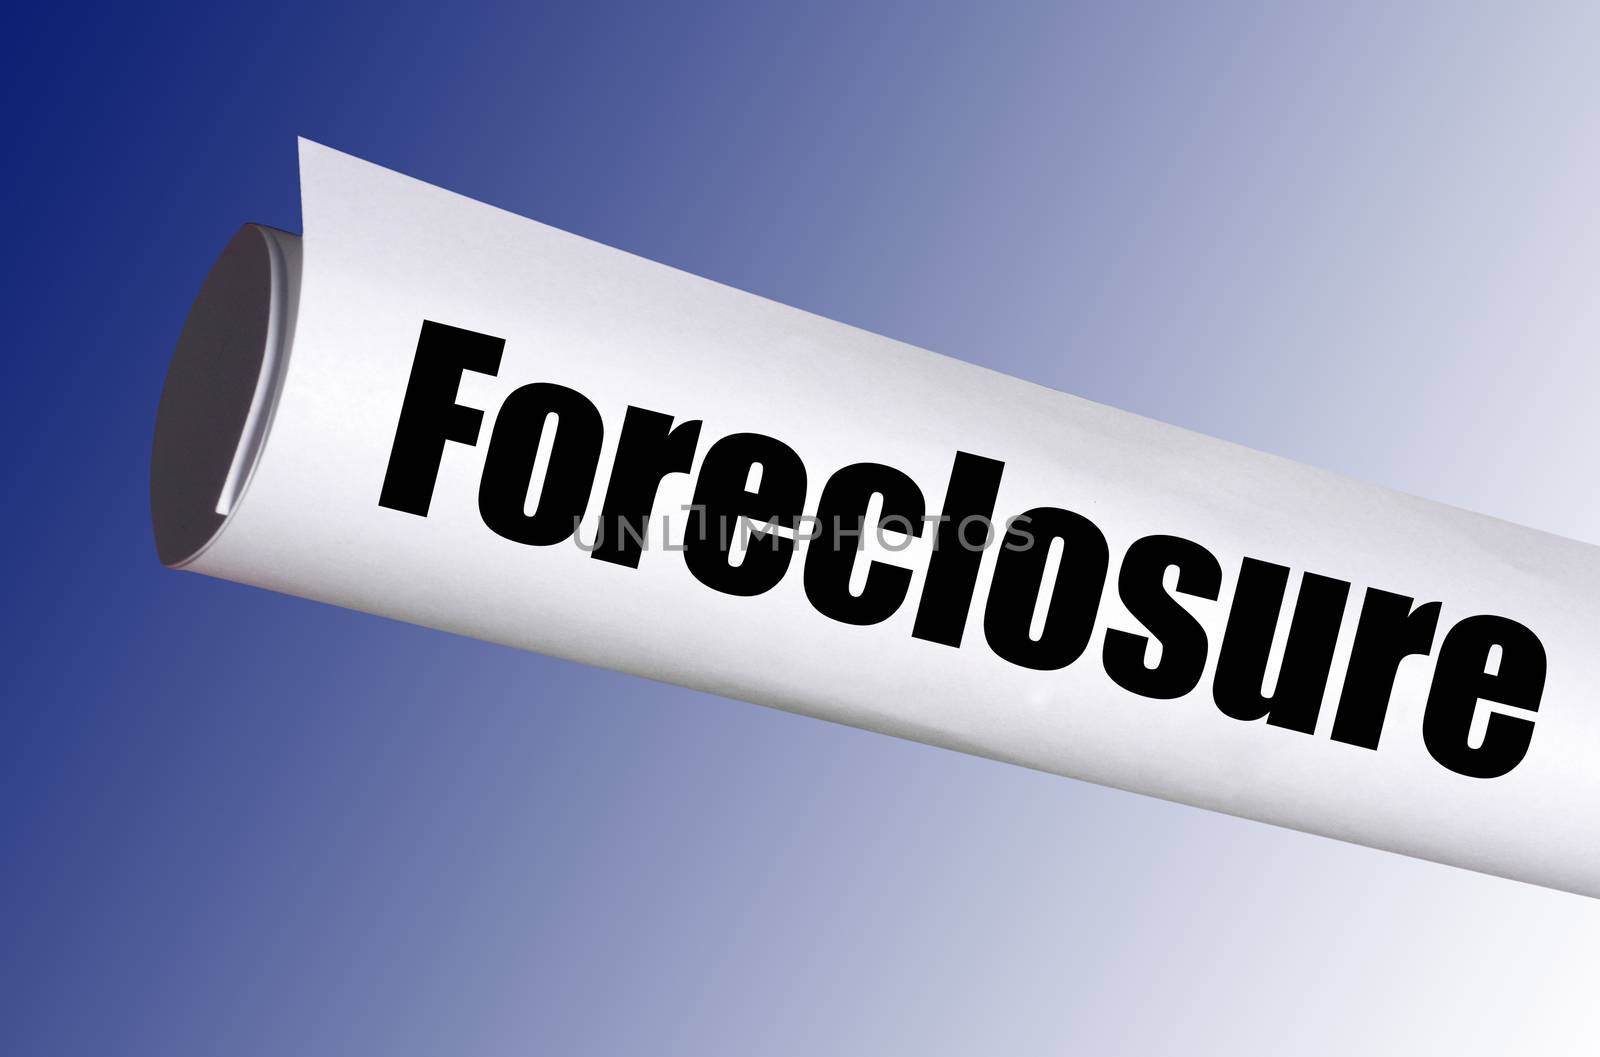 foreclosure legal notice by ftlaudgirl